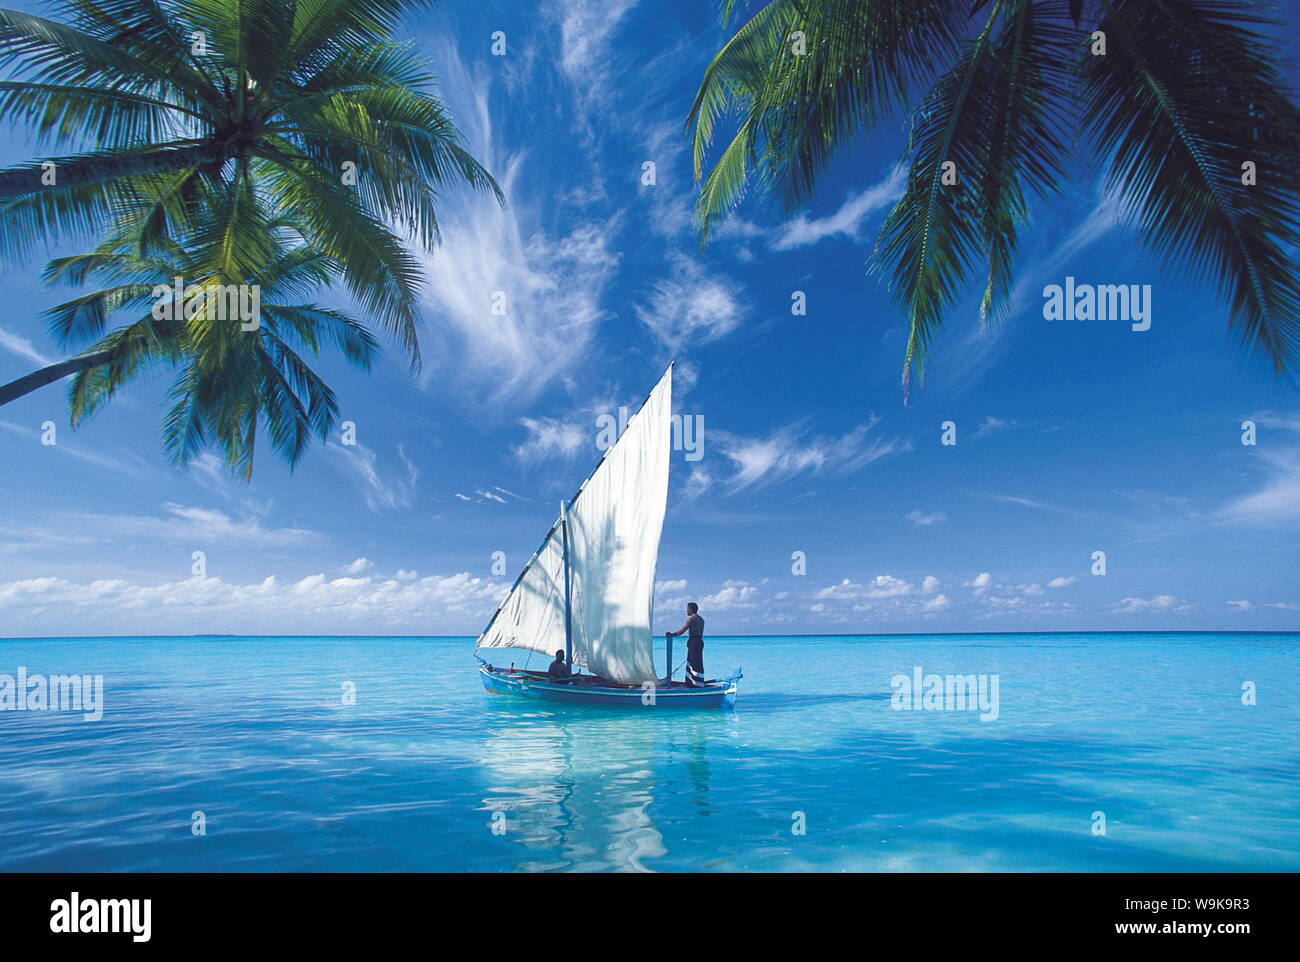 Traditionelles Dhoni, Malediven, Indischer Ozean, Asien Stockfoto